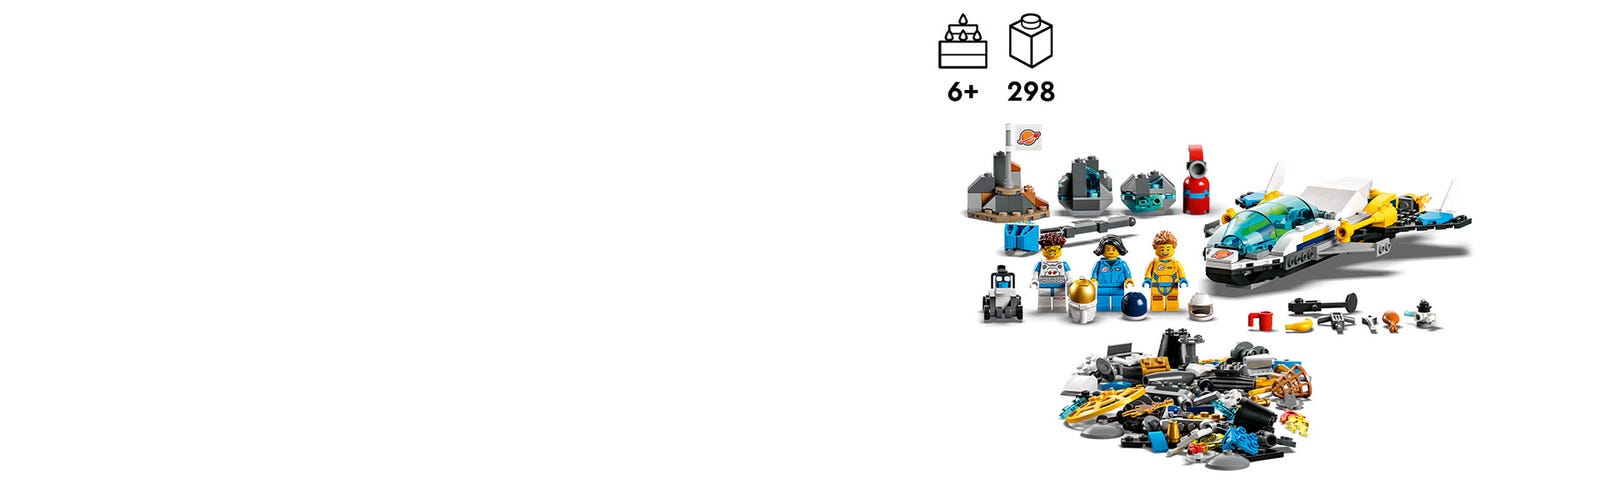 Offizieller Erkundungsmissionen LEGO® Shop | Weltraum | City im 60354 DE